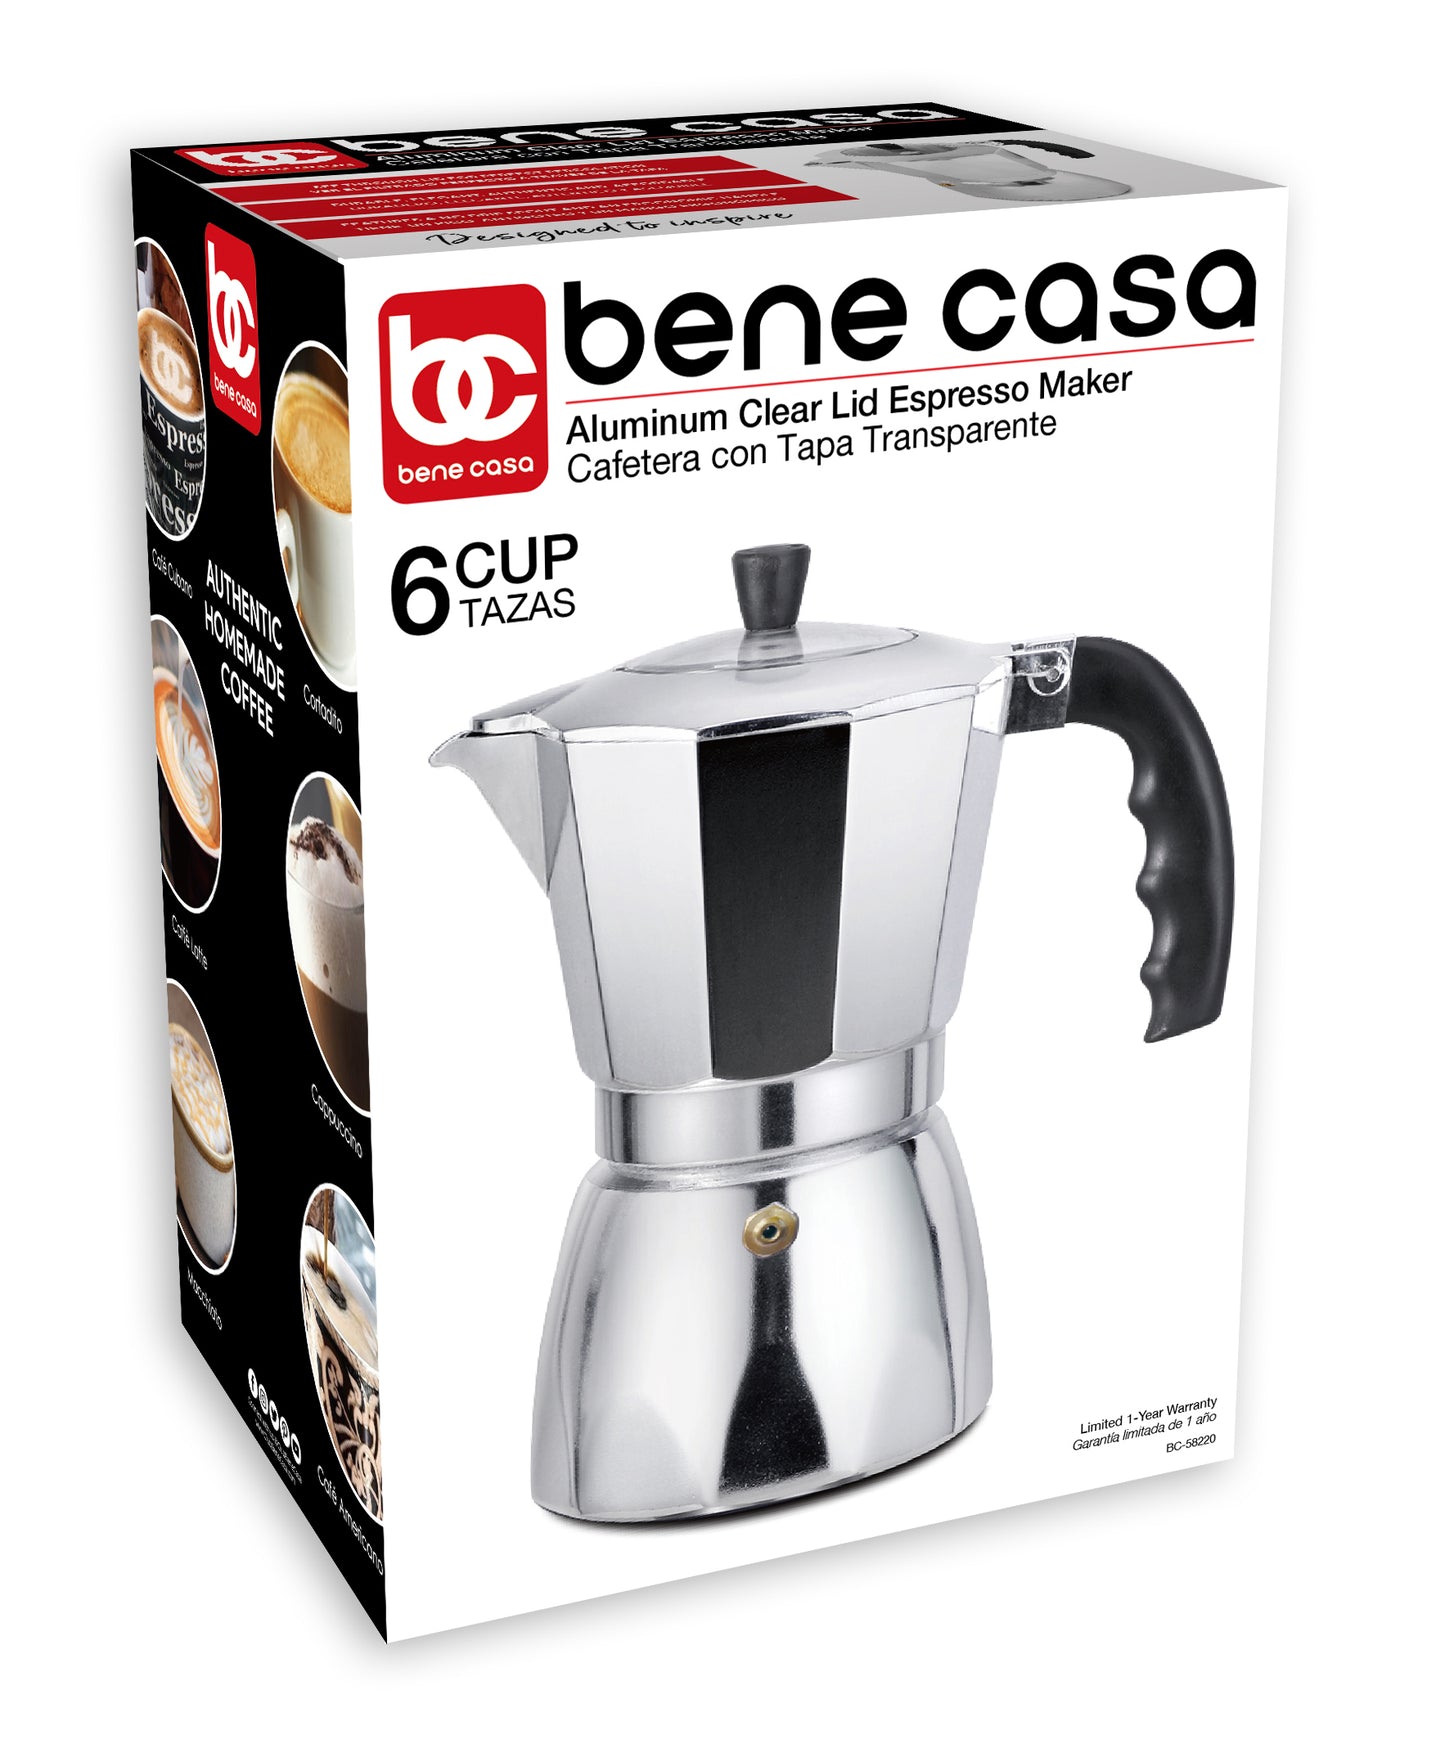 Bene Casa Stove Top See Thru Lid Espresso Coffee Maker, 6 CUP